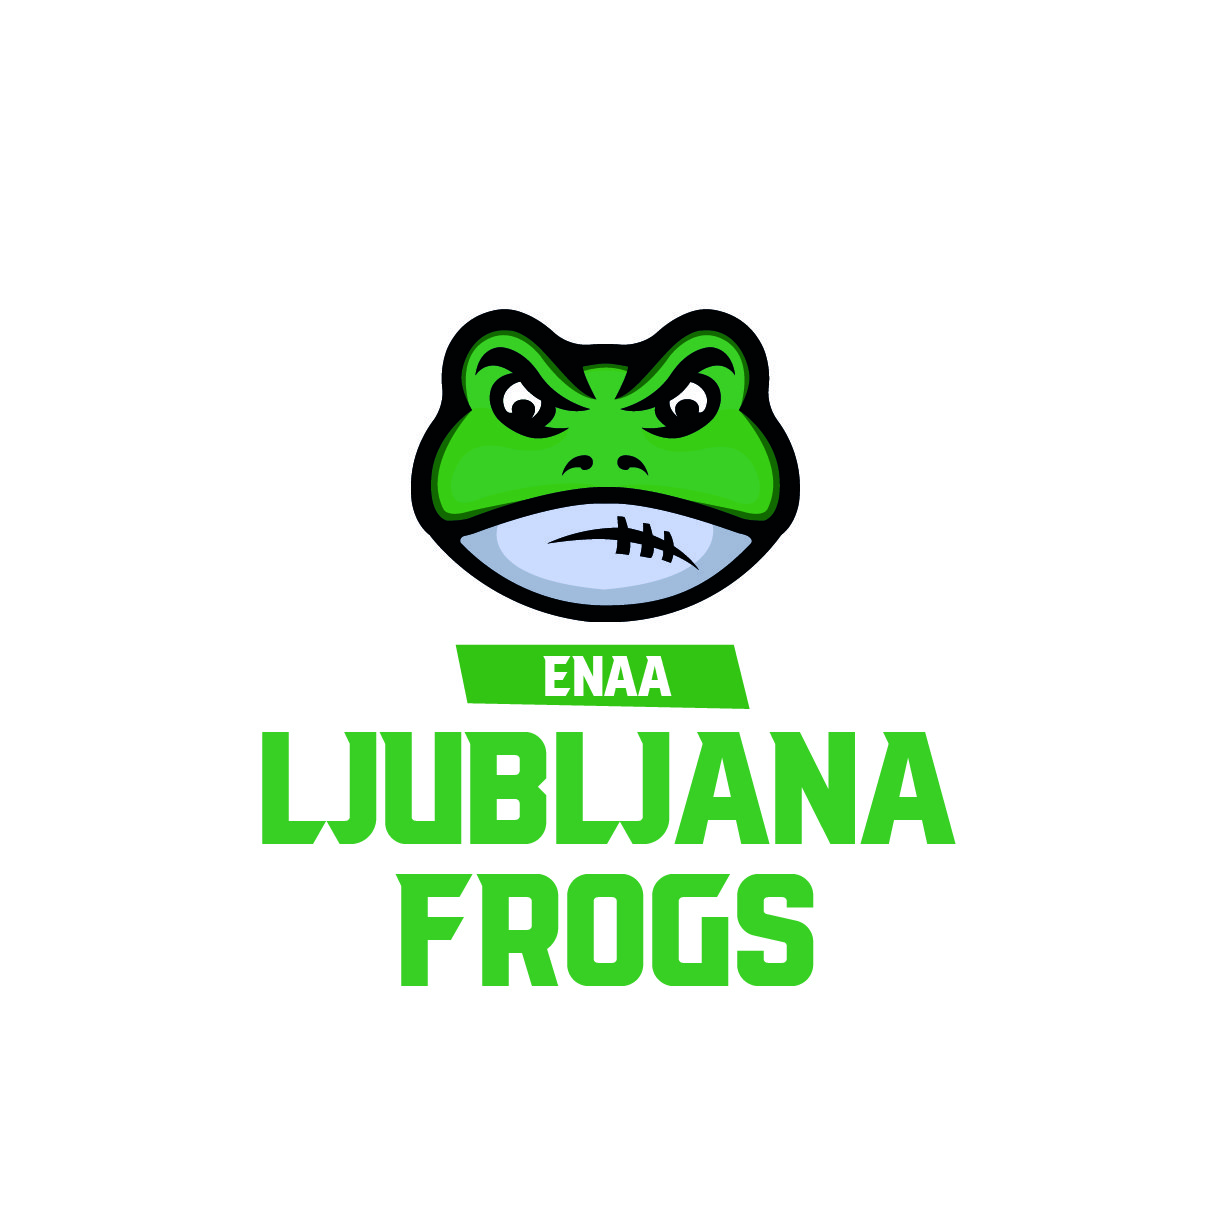 Follow Ljubljana Frogs flag football club on Instagram